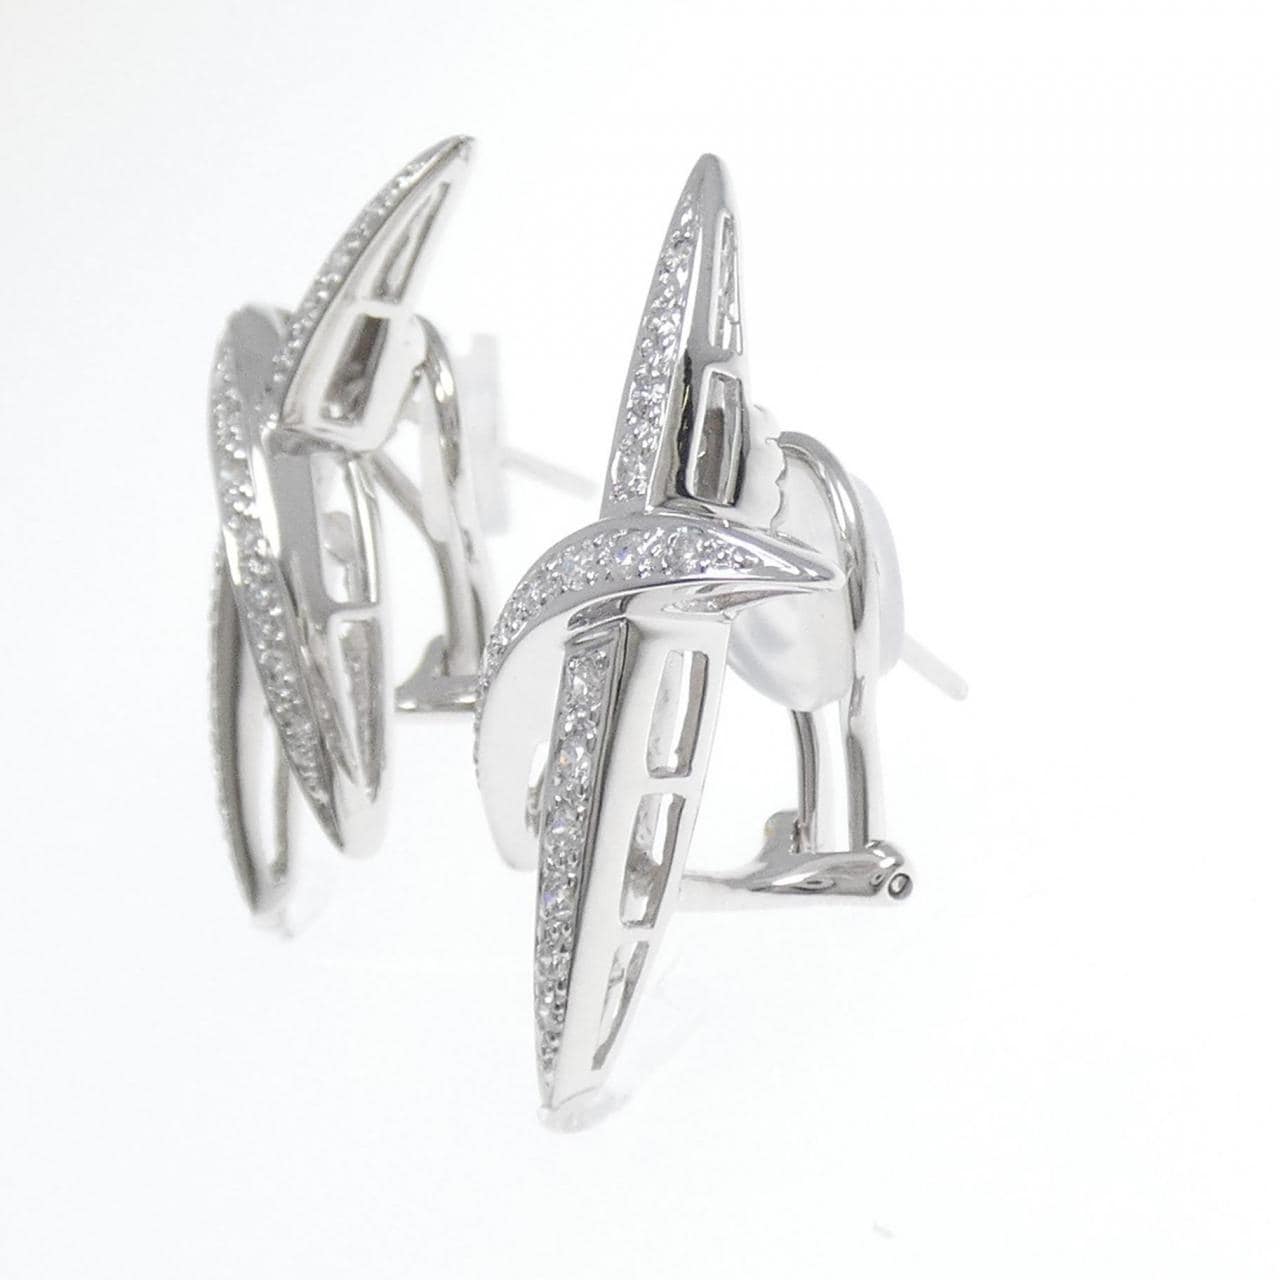 750WG Diamond earrings 0.70CT